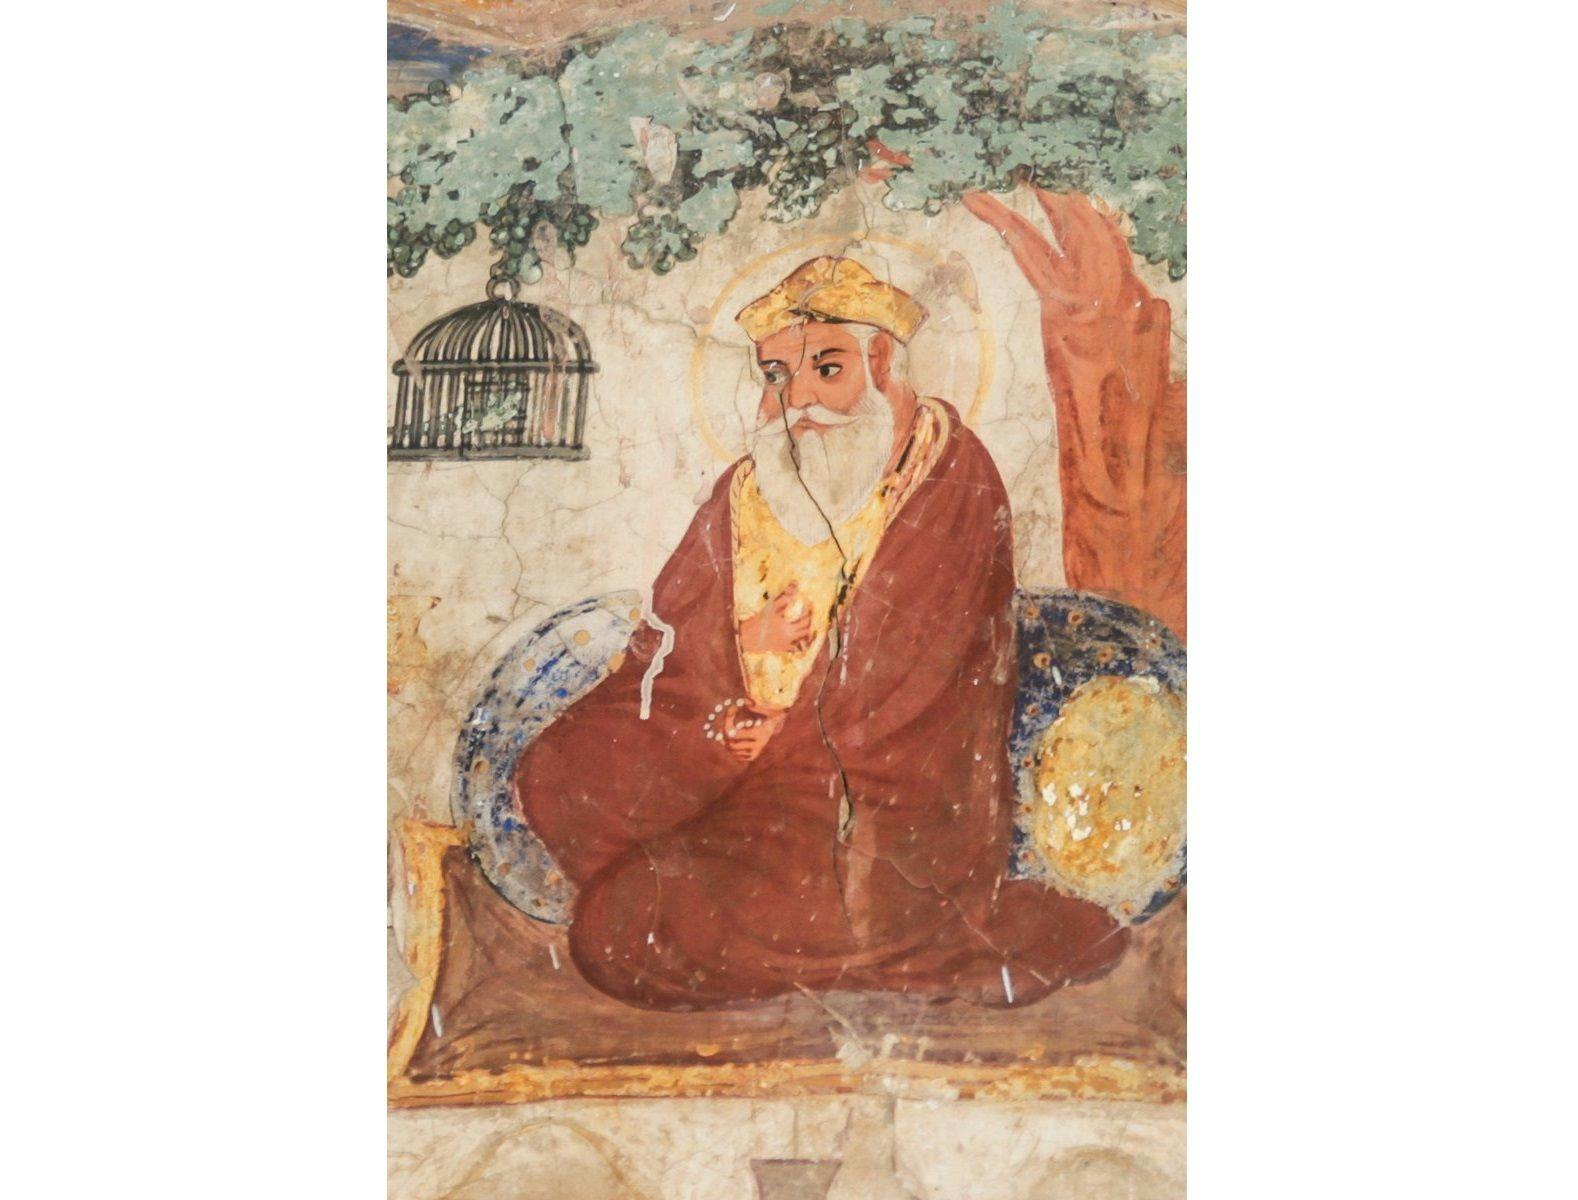 Mural painting of Guru Nanak from Gurdwara Baba Atal Rai, Amritsar